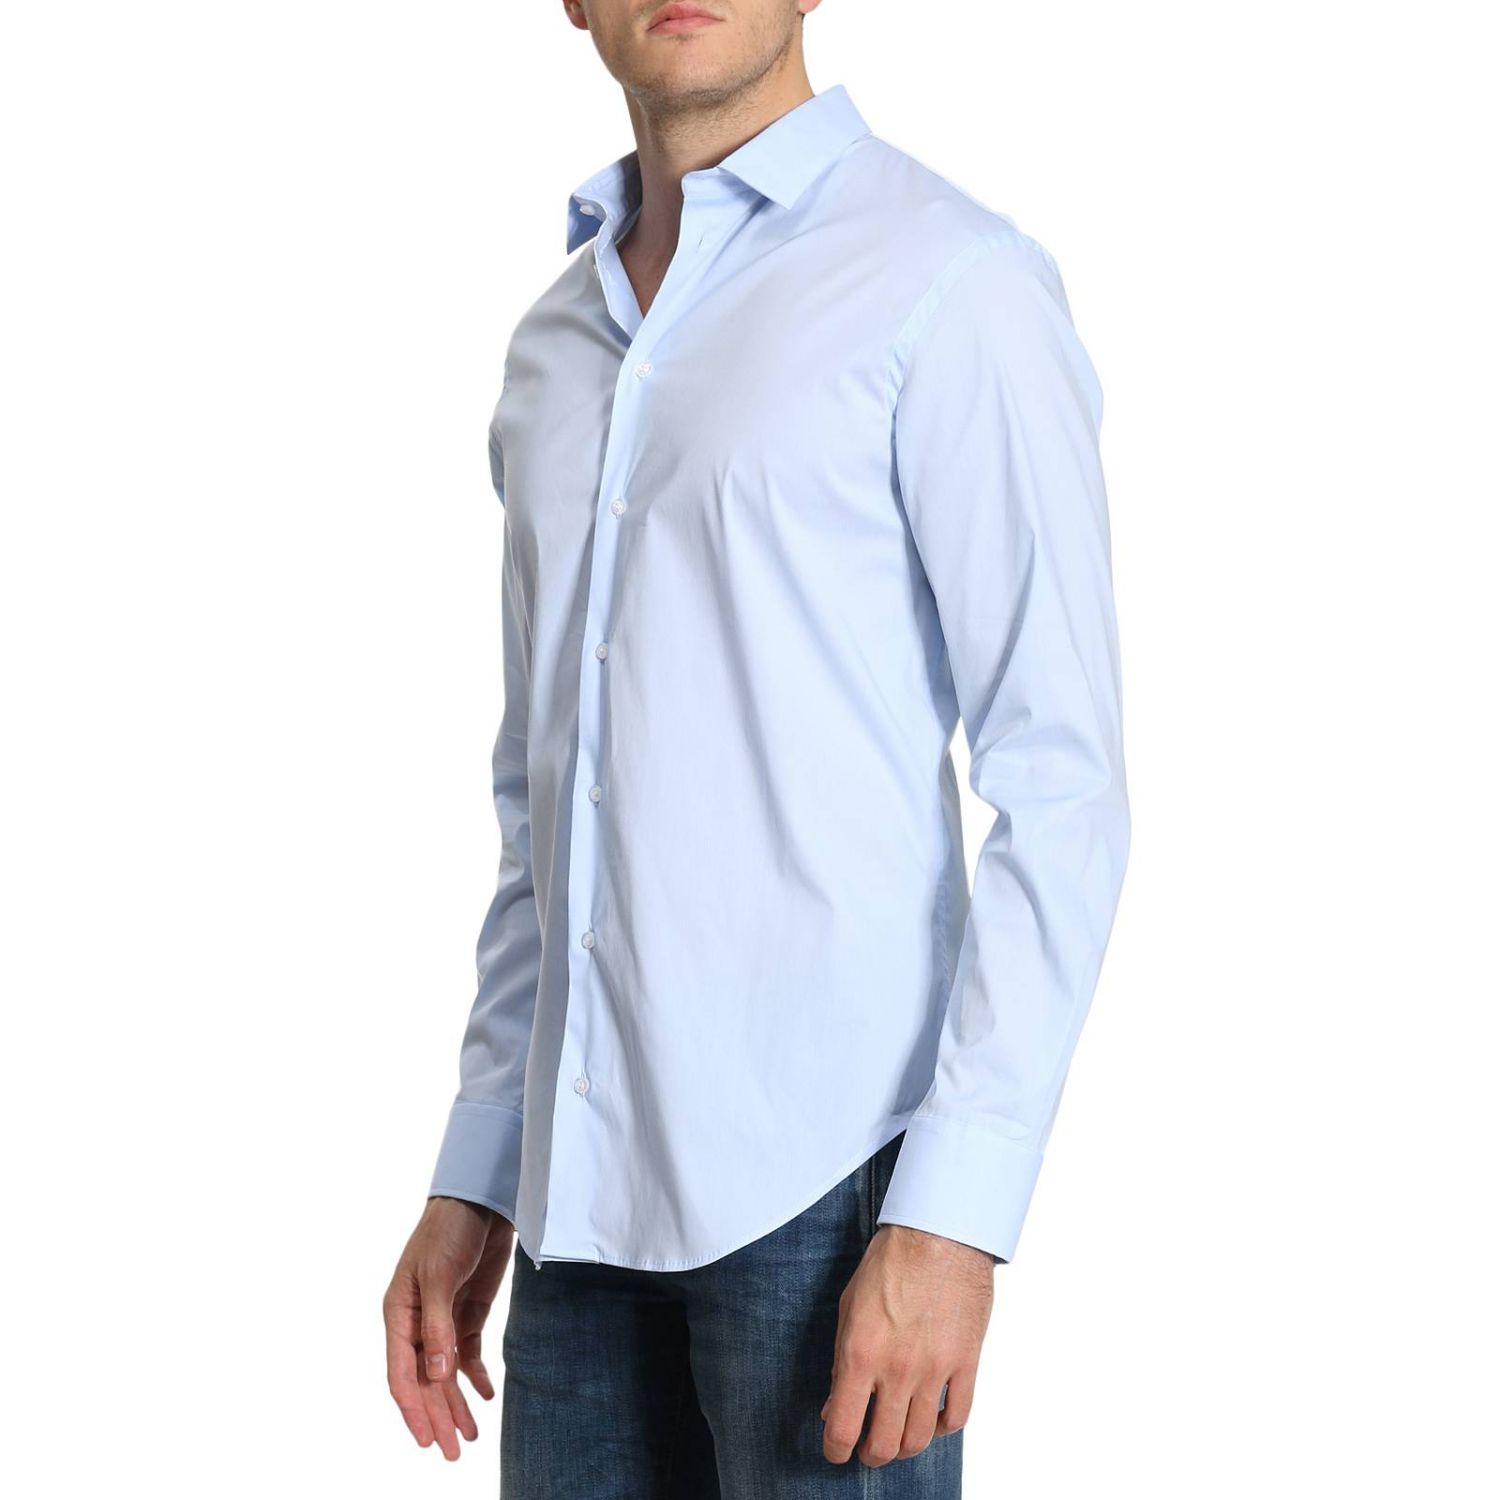 Emporio Armani Outlet: Shirt men | Shirt Emporio Armani Men Gnawed Blue ...